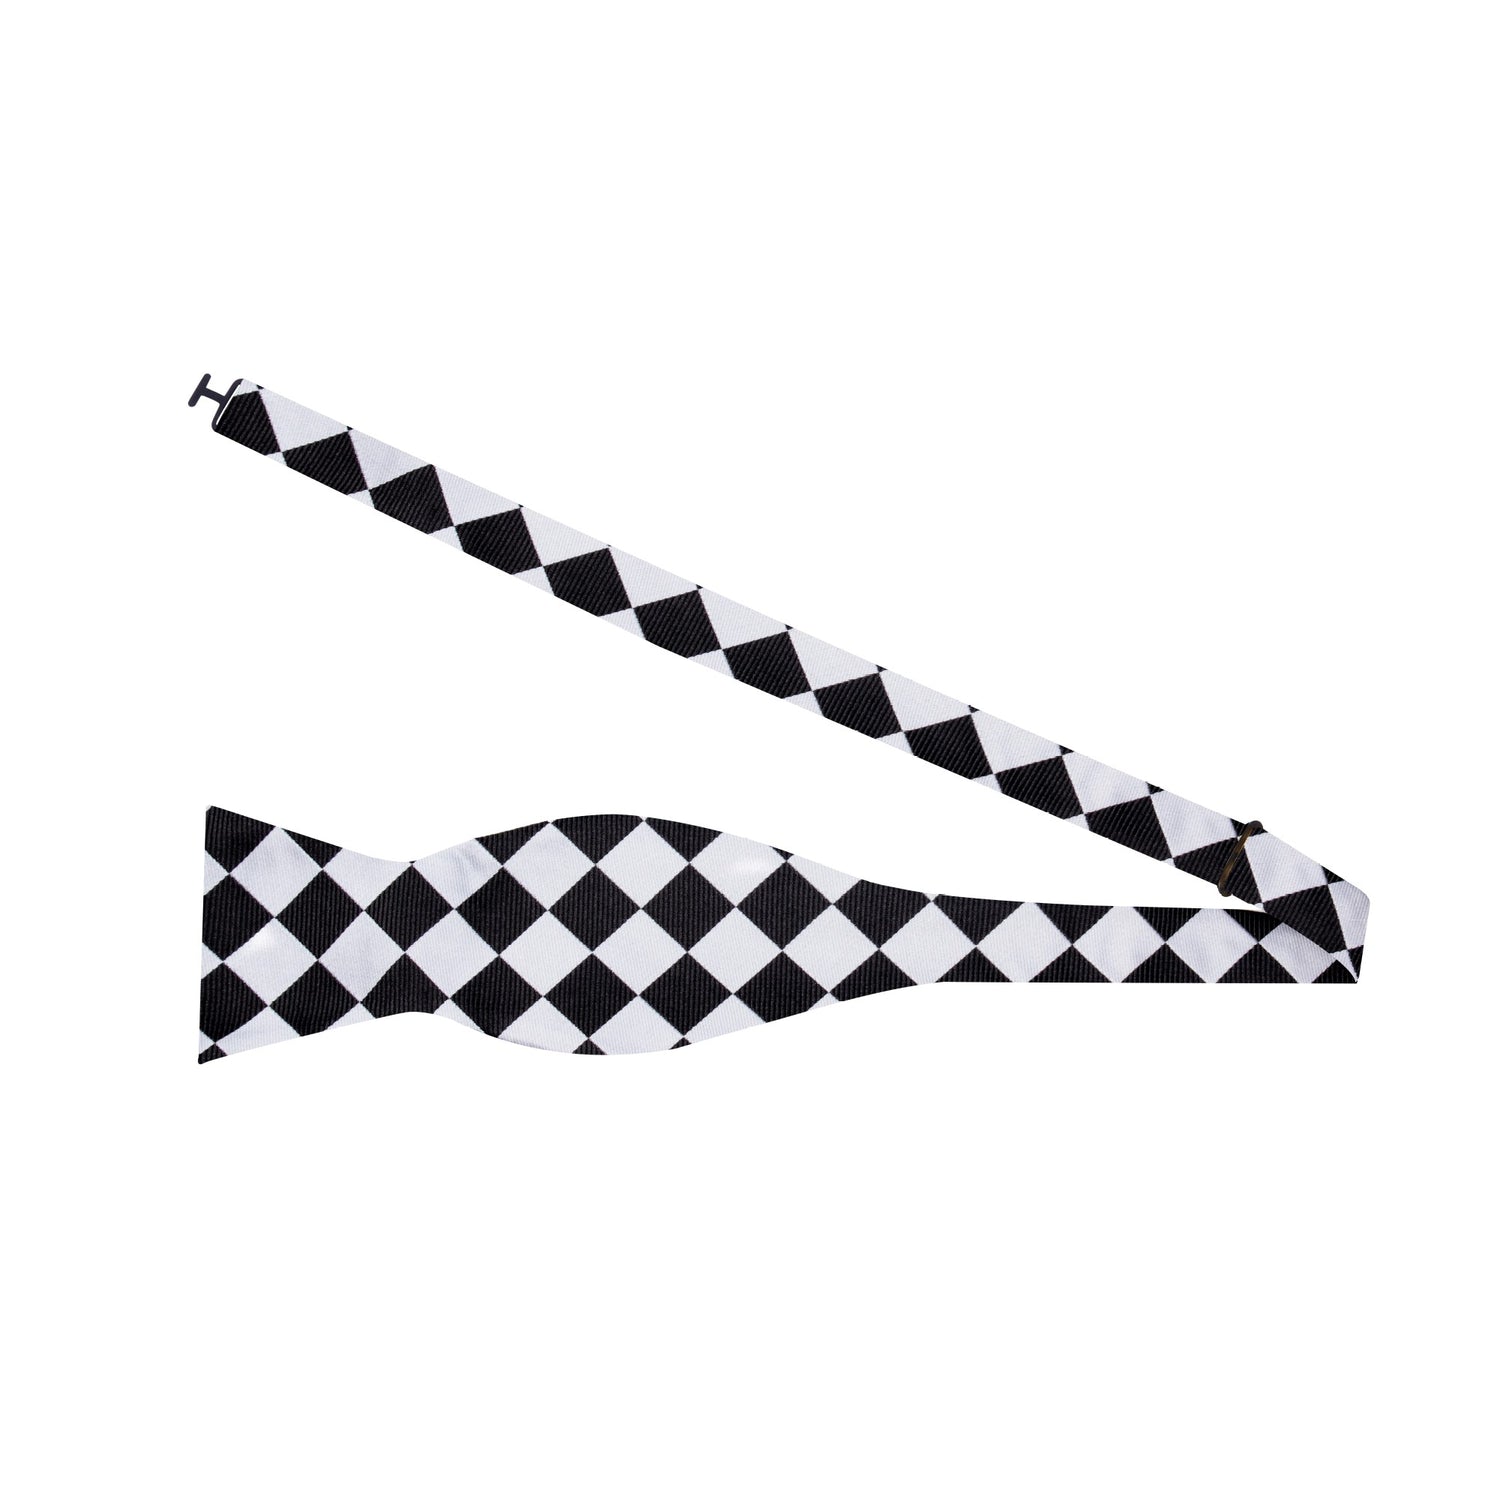 Single Self Tie Bow Tie: A Light Grey and Black Checkerboard Pattern Silk Self Tie Bow Tie